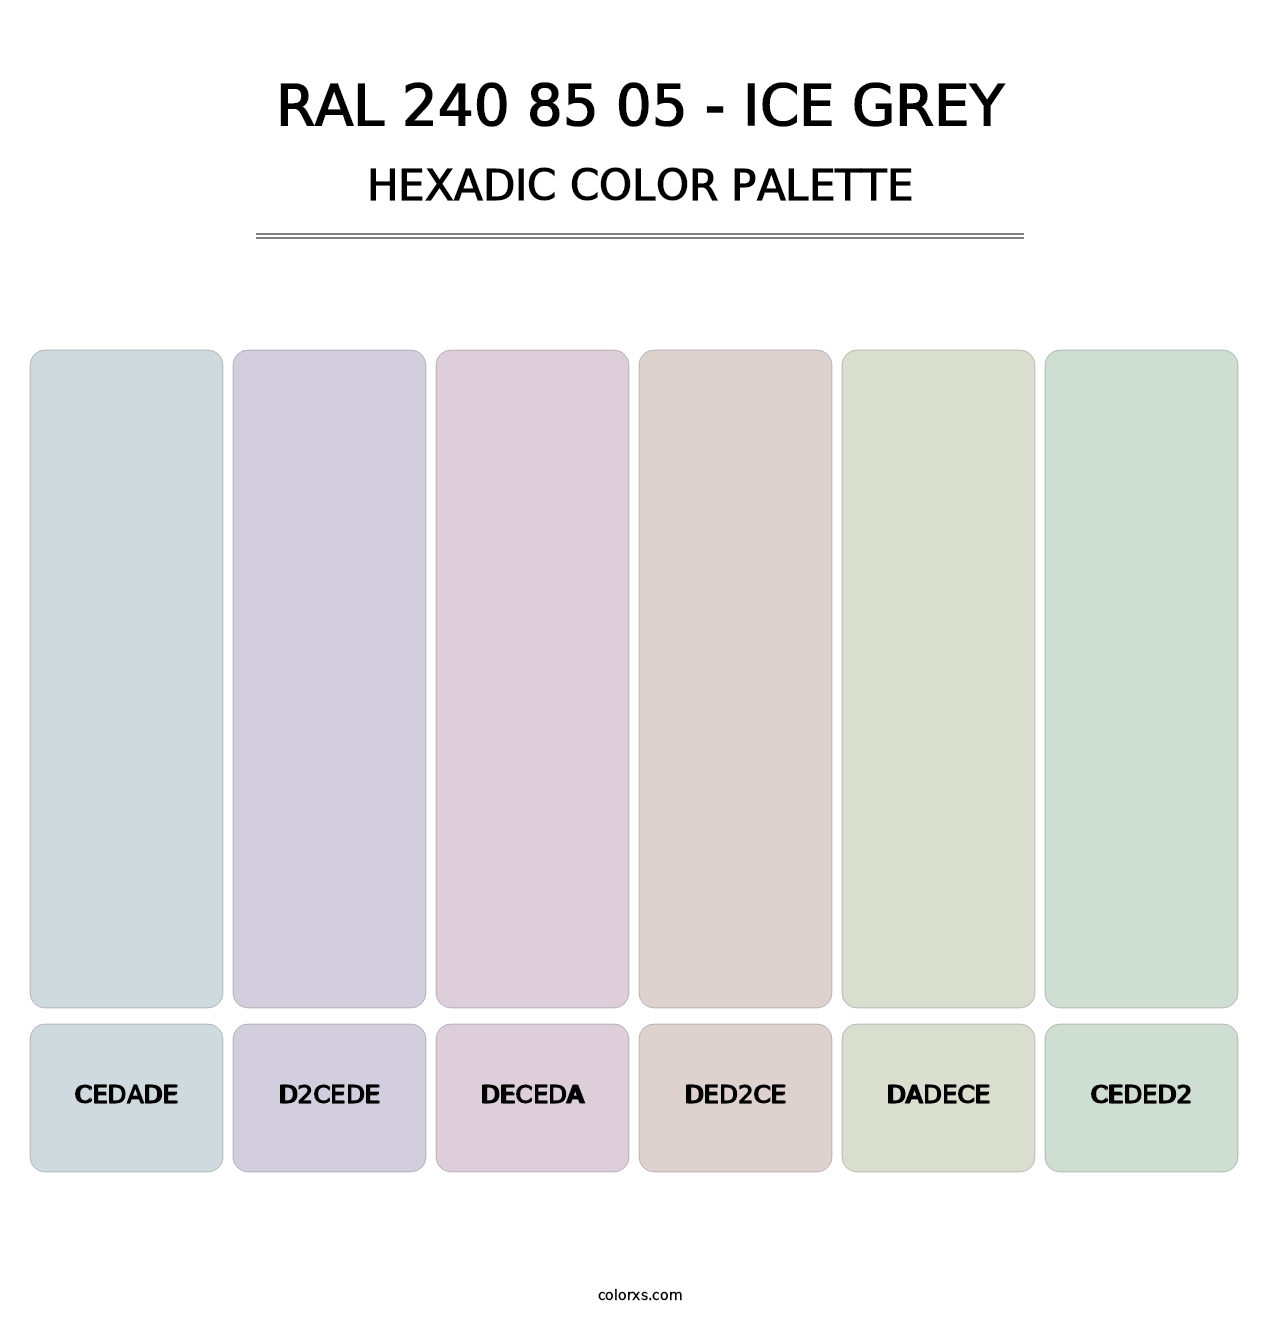 RAL 240 85 05 - Ice Grey - Hexadic Color Palette